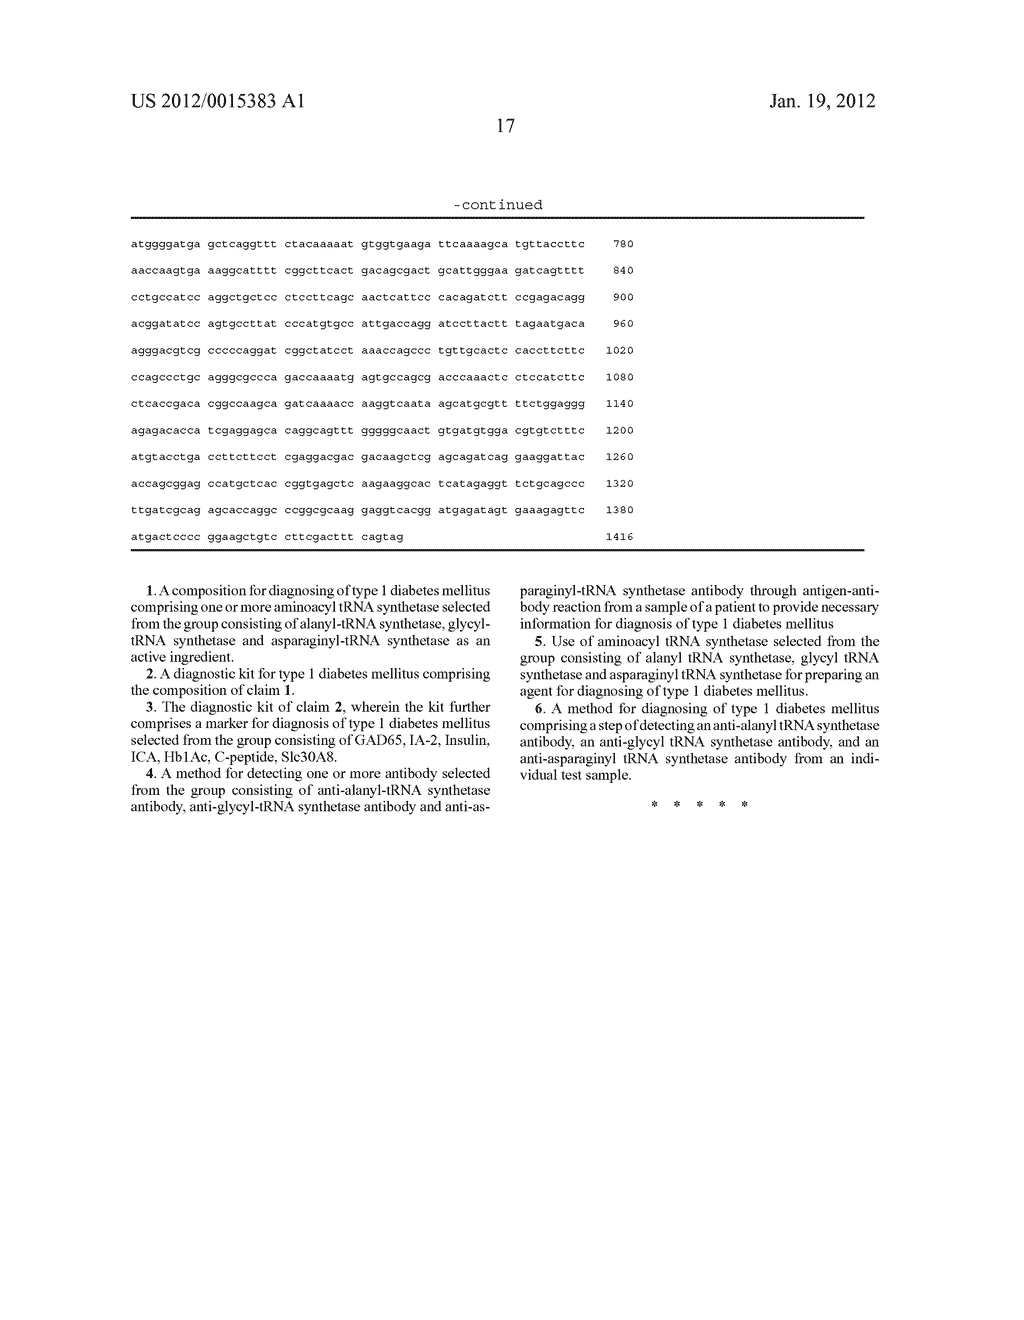 NOVEL DIAGNOSTIC MARKER FOR TYPE 1 DIABETES MELLITUS - diagram, schematic, and image 20